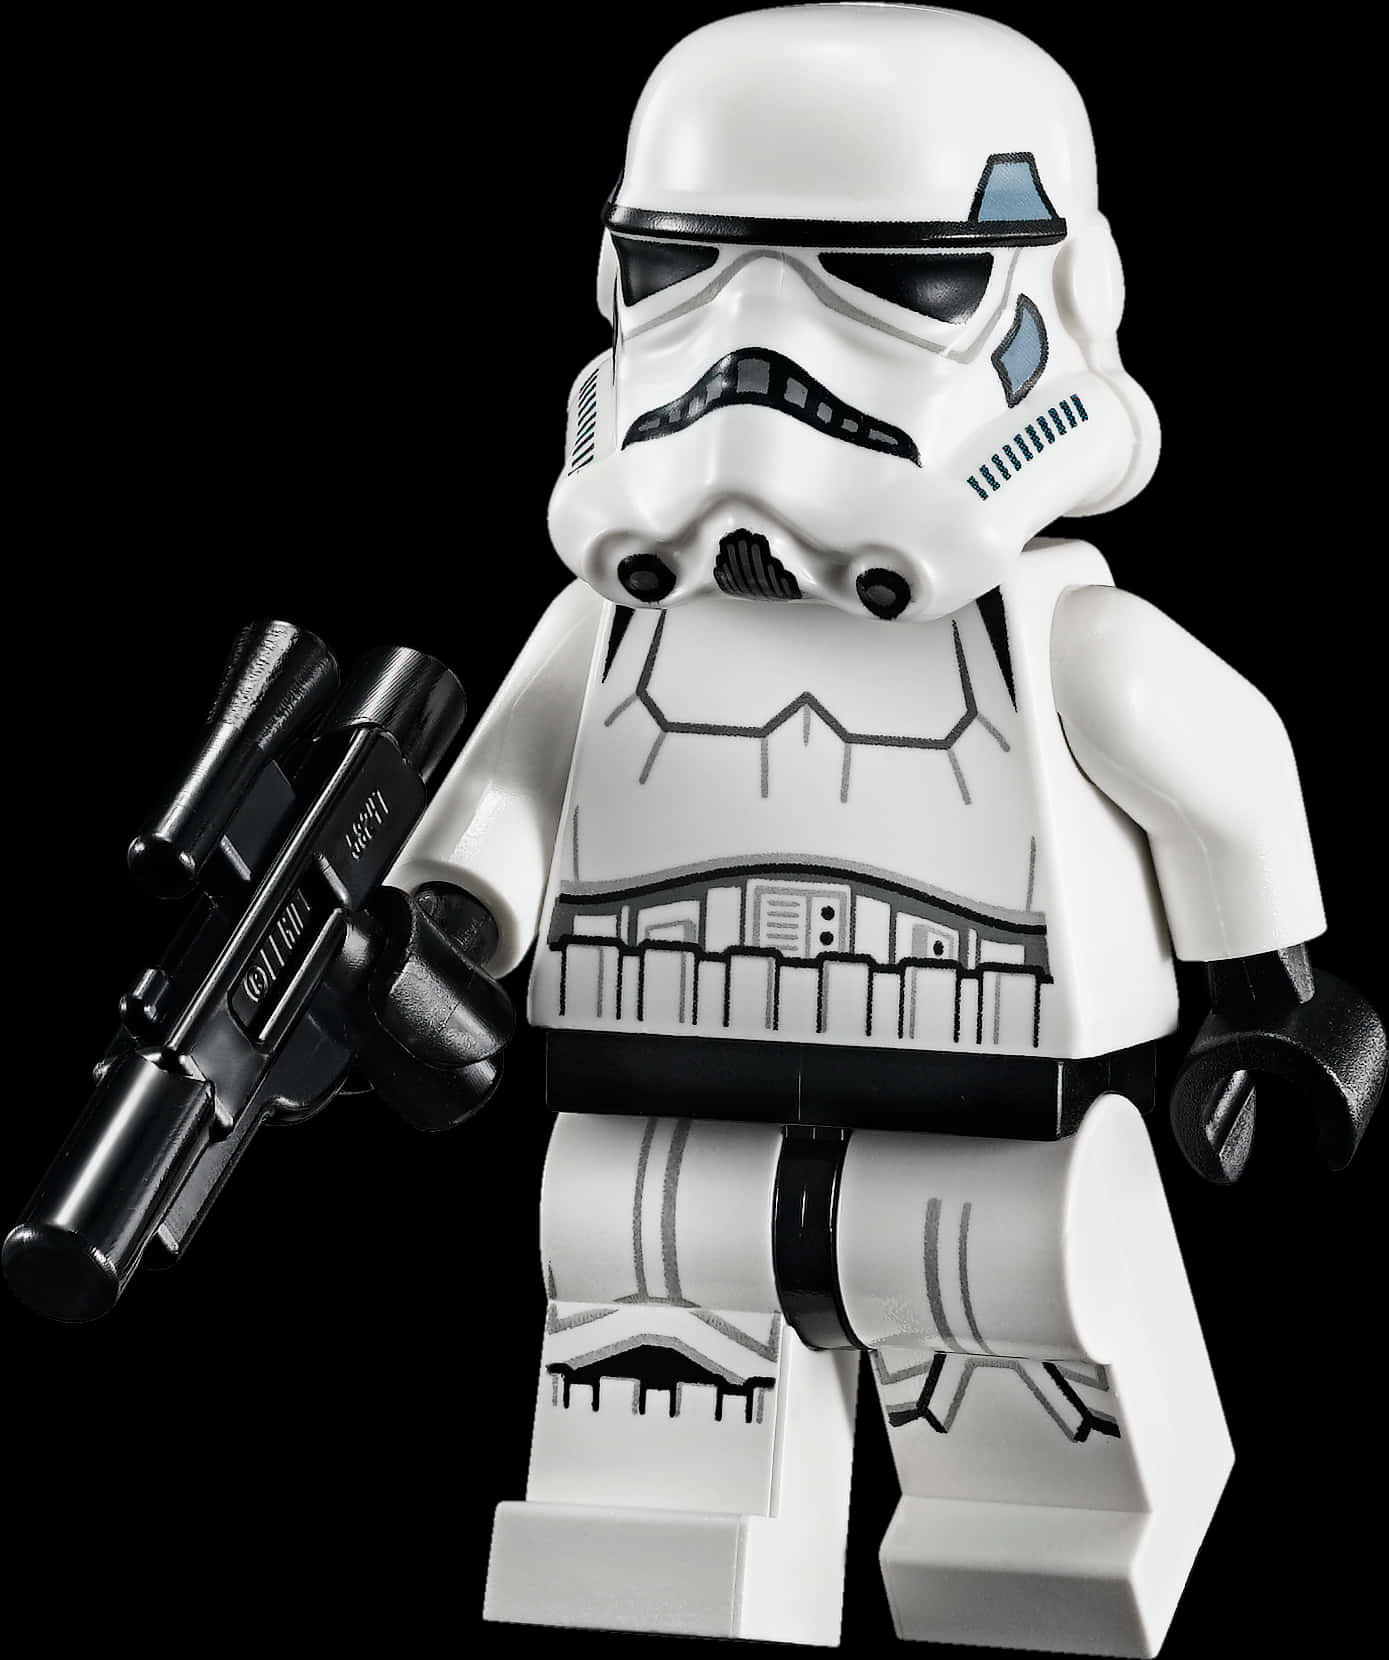 A White Lego Figure Holding A Gun